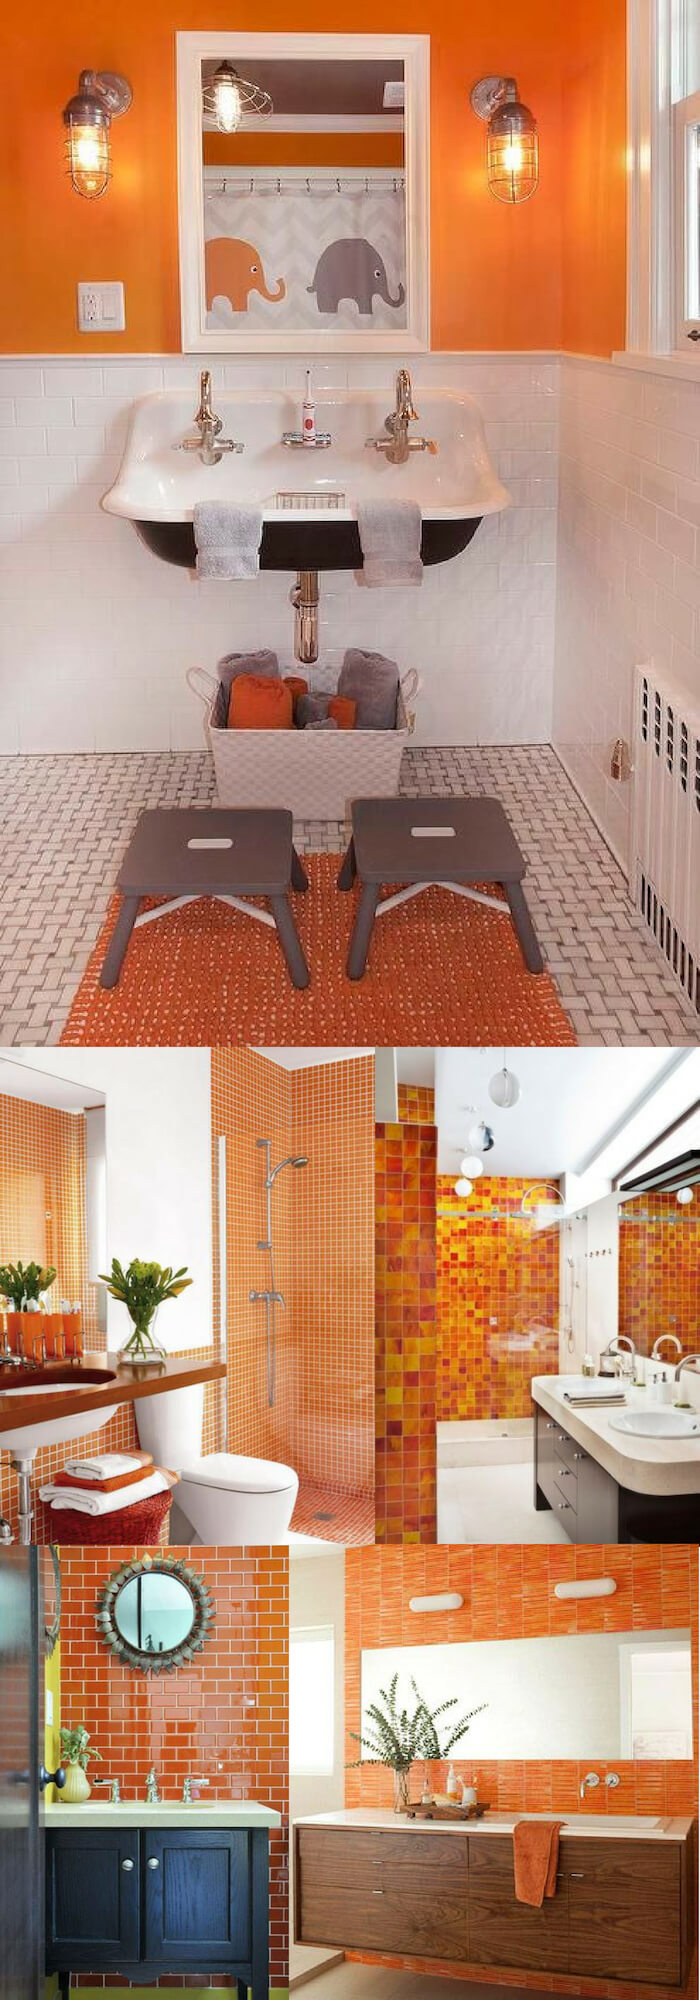 Orange Wall | Unique Wall Tile Ideas for Bathroom Design